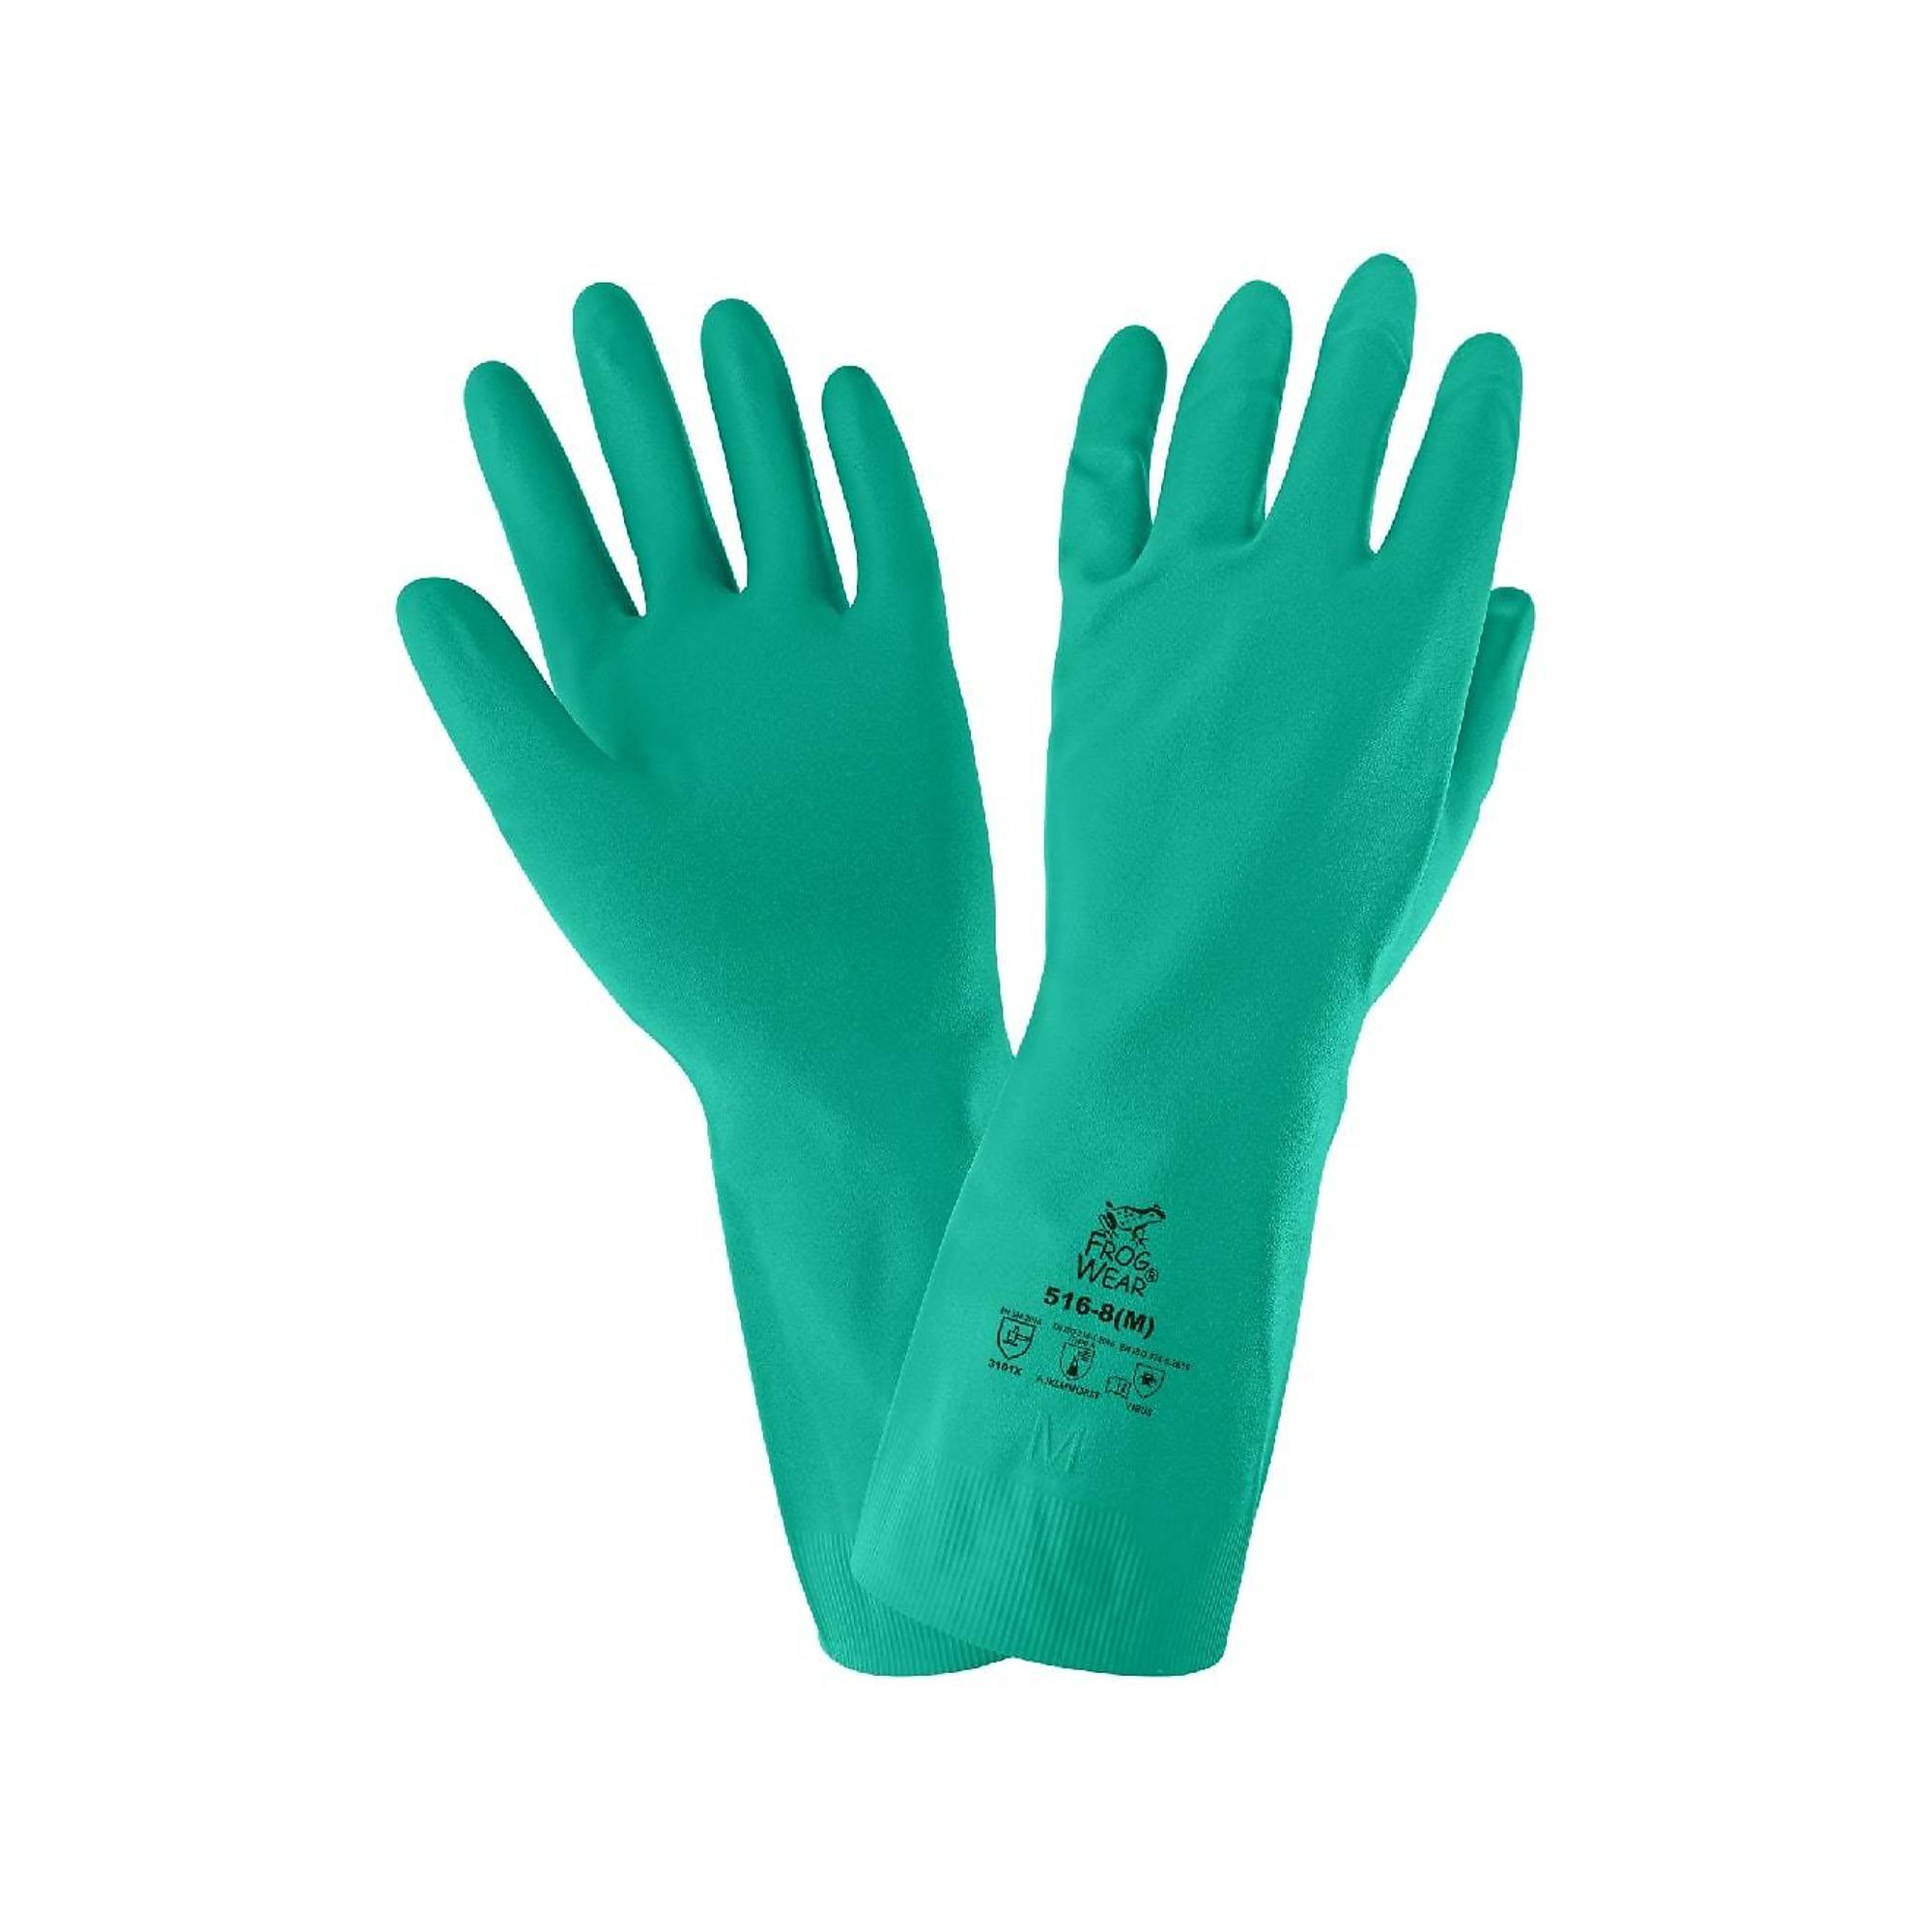 FrogWear, FrogWear 13Inch, 16-Mil, Sea Green Nitrile Gloves - 12 Pairs, Size XL, Color Green, Included (qty.) 12 Model 516-10(XL)